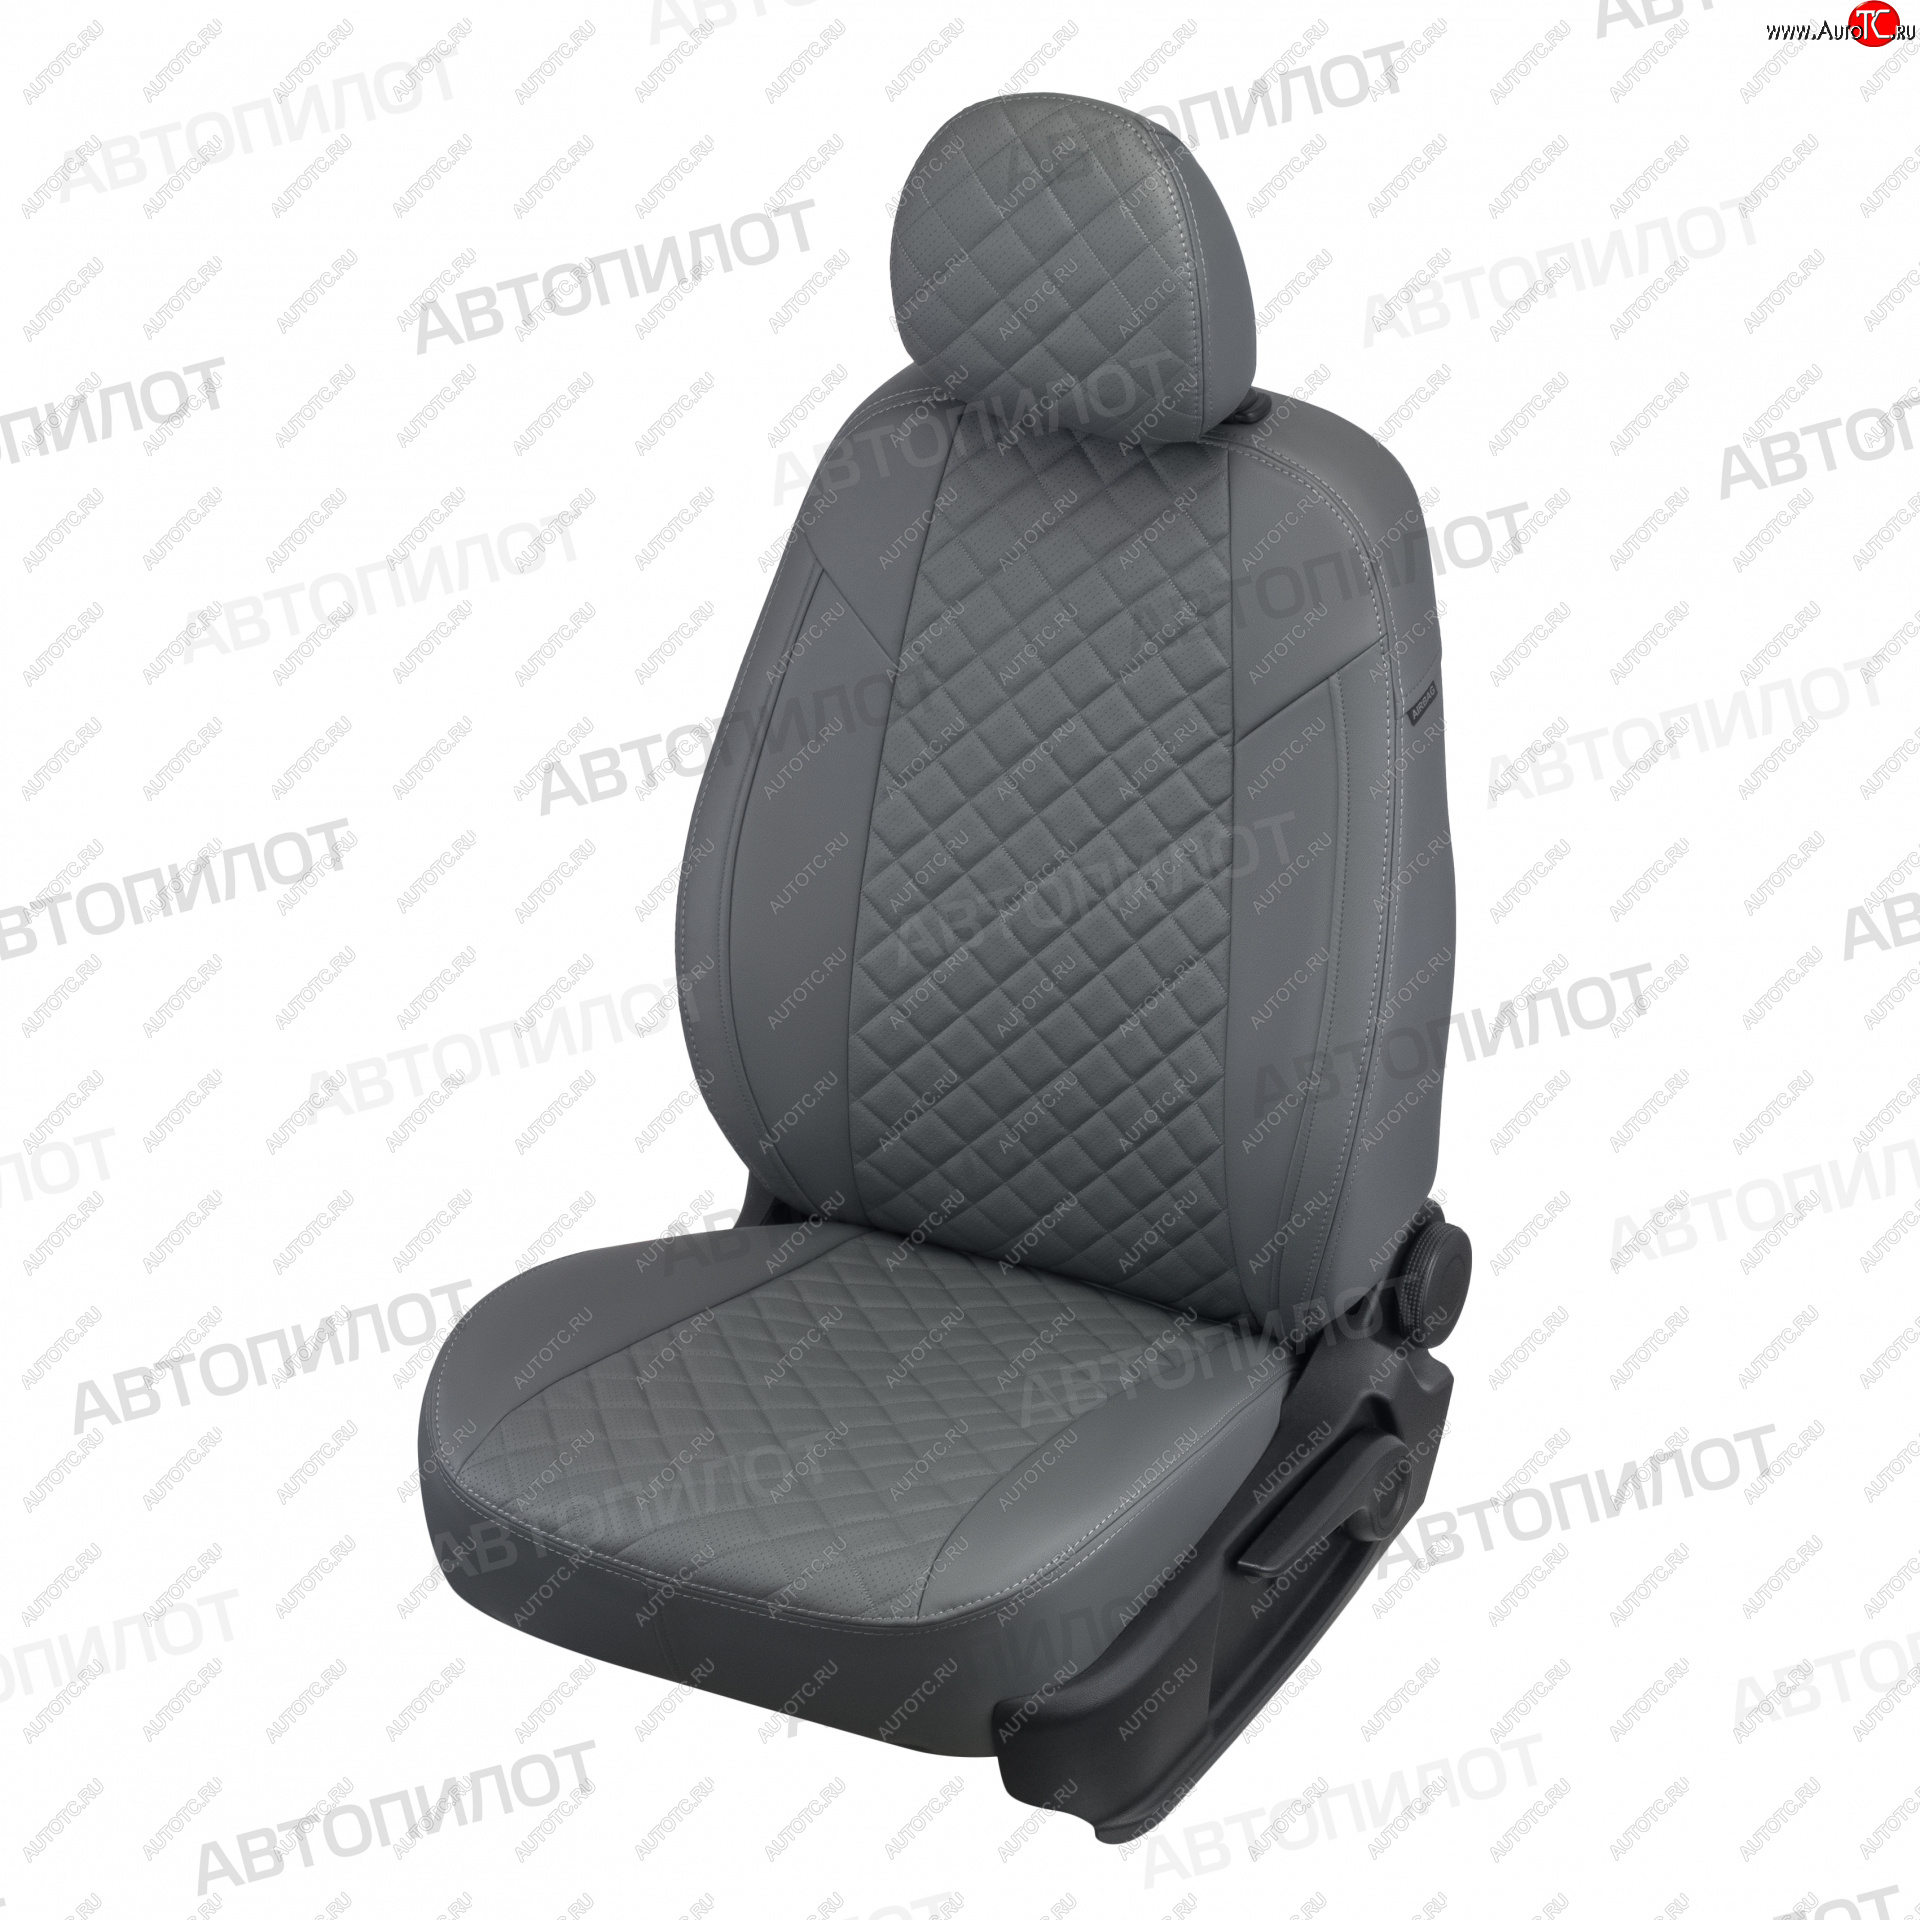 7 799 р. Чехлы сидений (Trend, экокожа) Автопилот Ромб  Ford Kuga  1 (2008-2013) (серый)